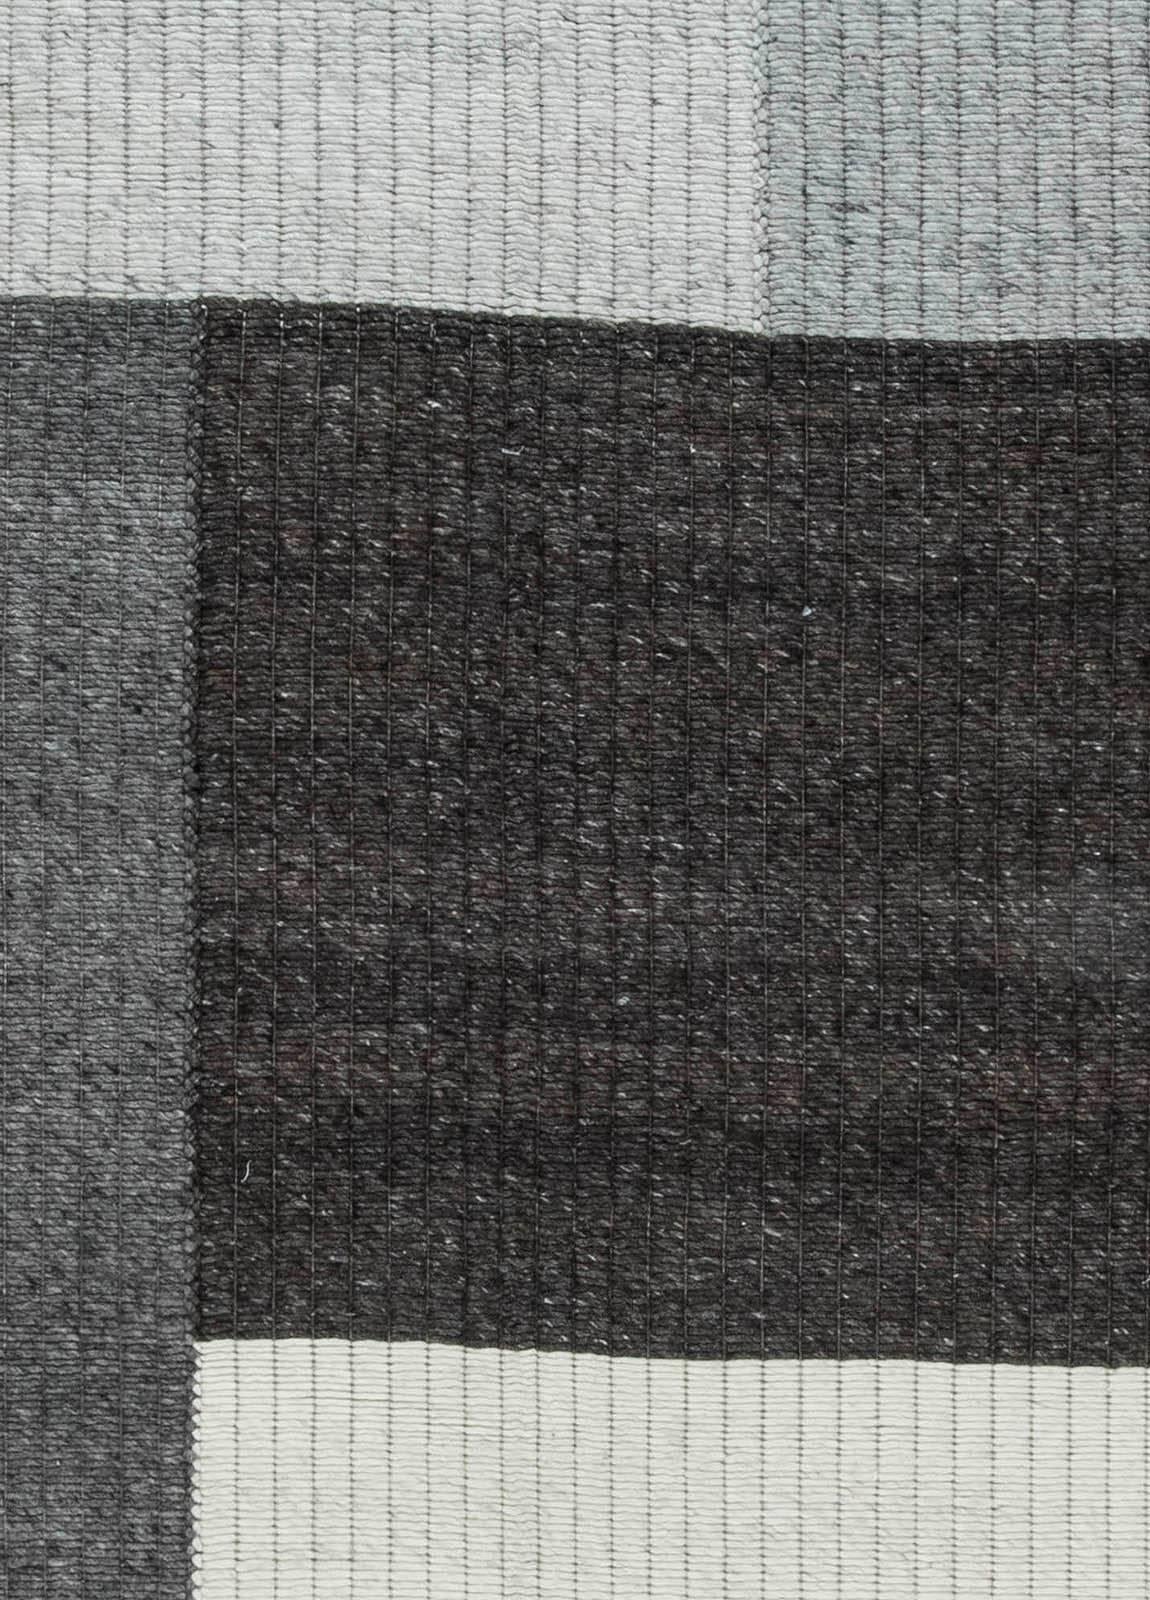 Modern geometric grey, white and black flat-woven wool carpet.
Size: 13'2